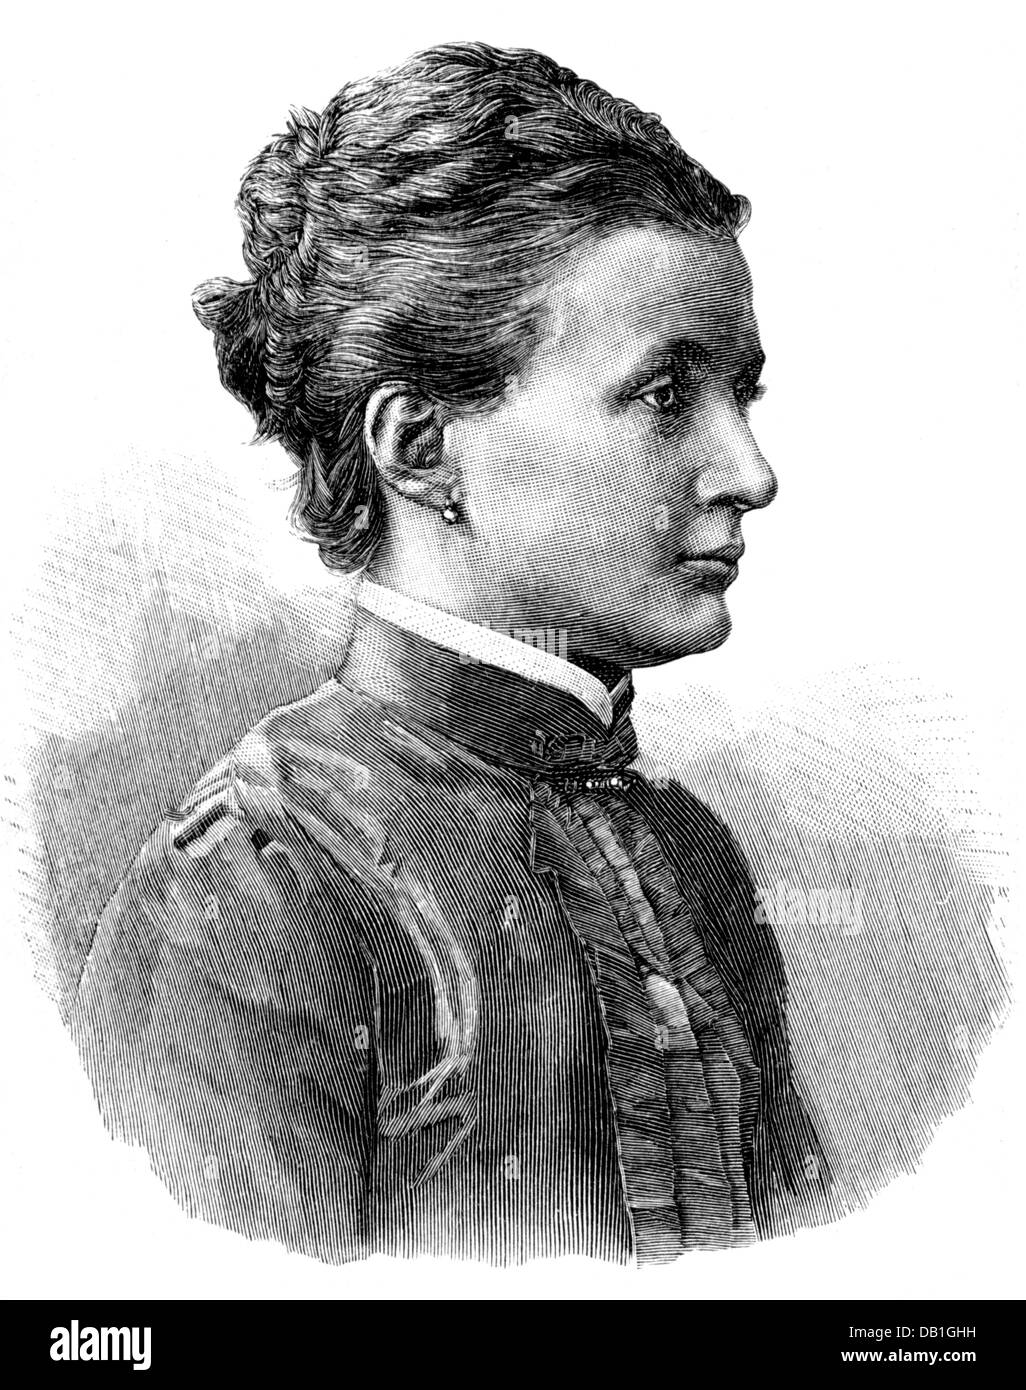 Therese, 12.11.1850 - 19.9.1925, Princess of Bavaria, German scientist, portrait, wood engraving, 1897, Stock Photo